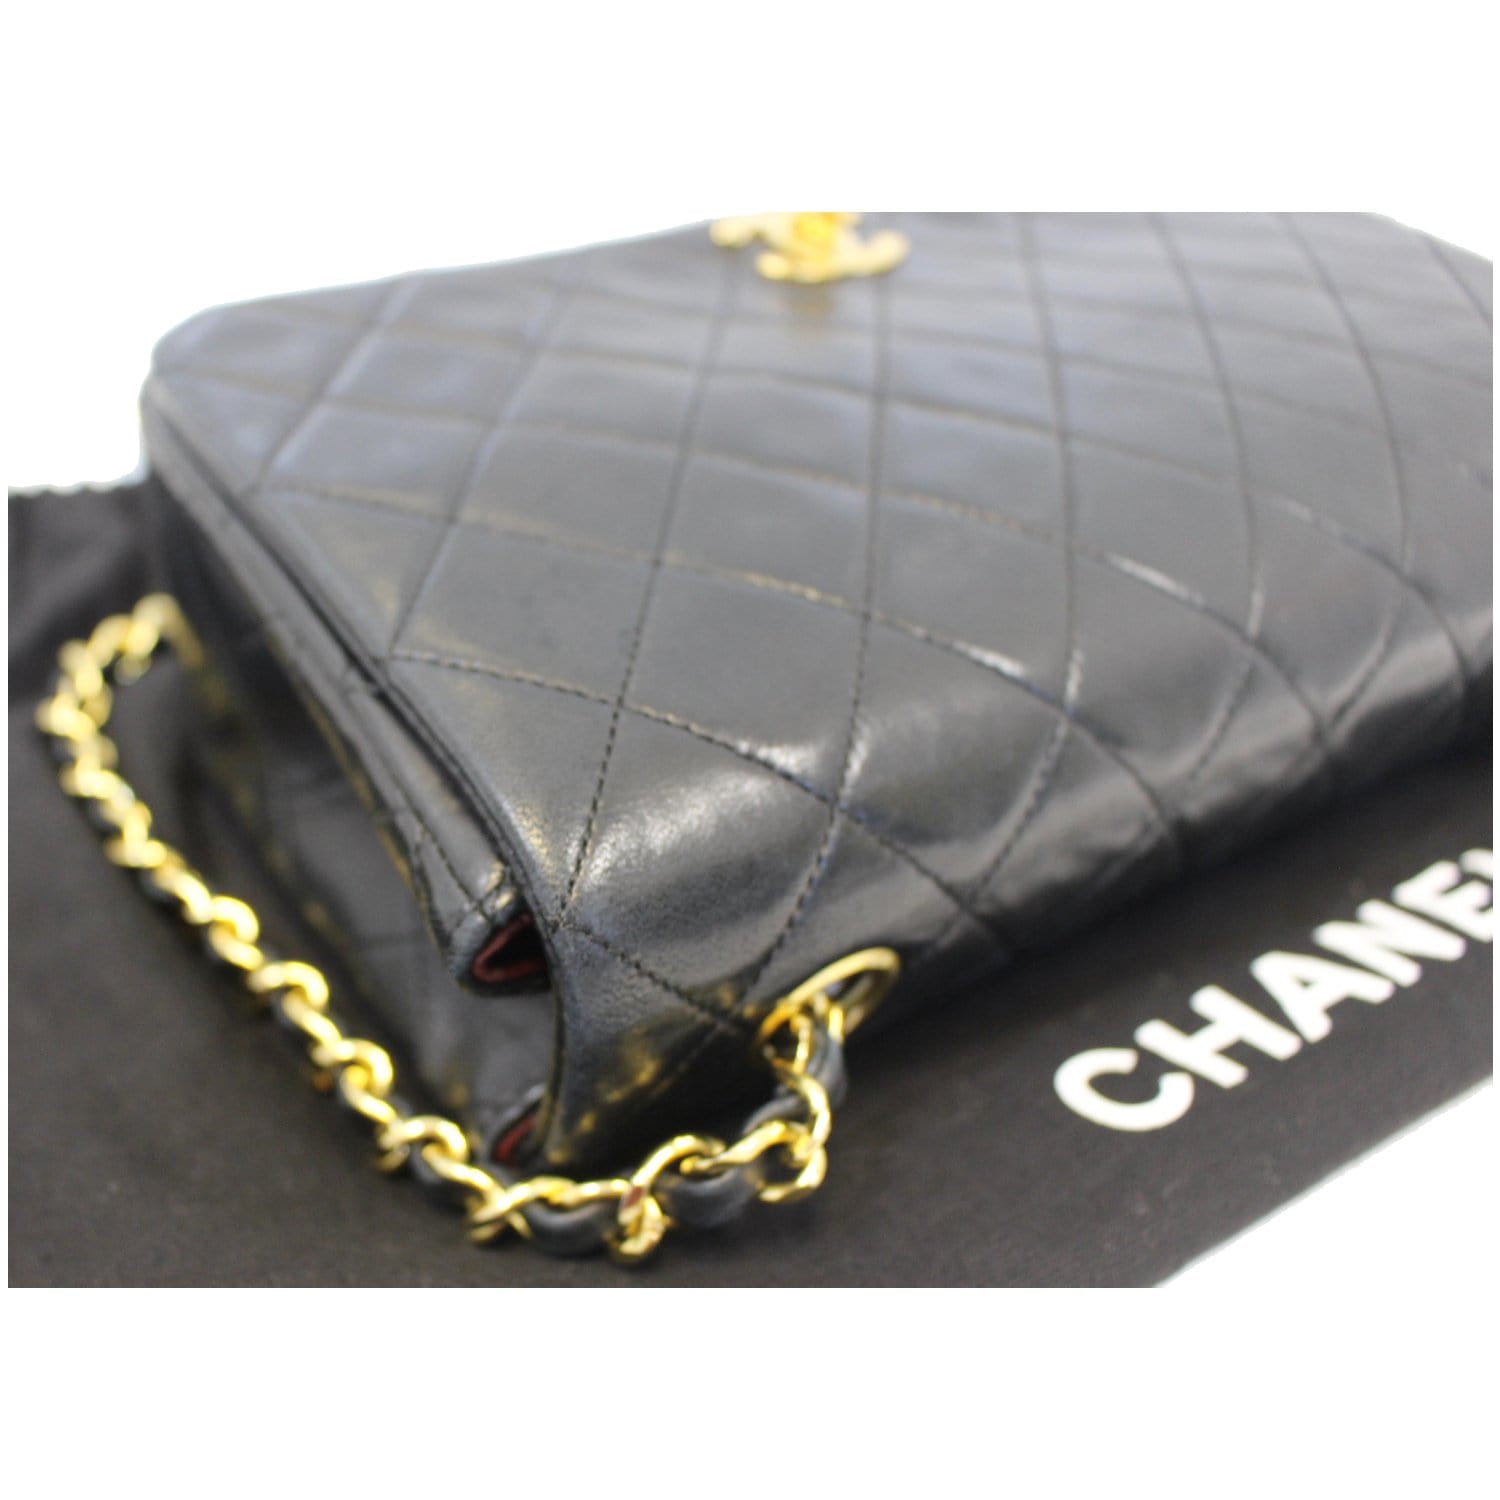 Chanel Flap Bag  Chanel Vintage Single Flap Bag